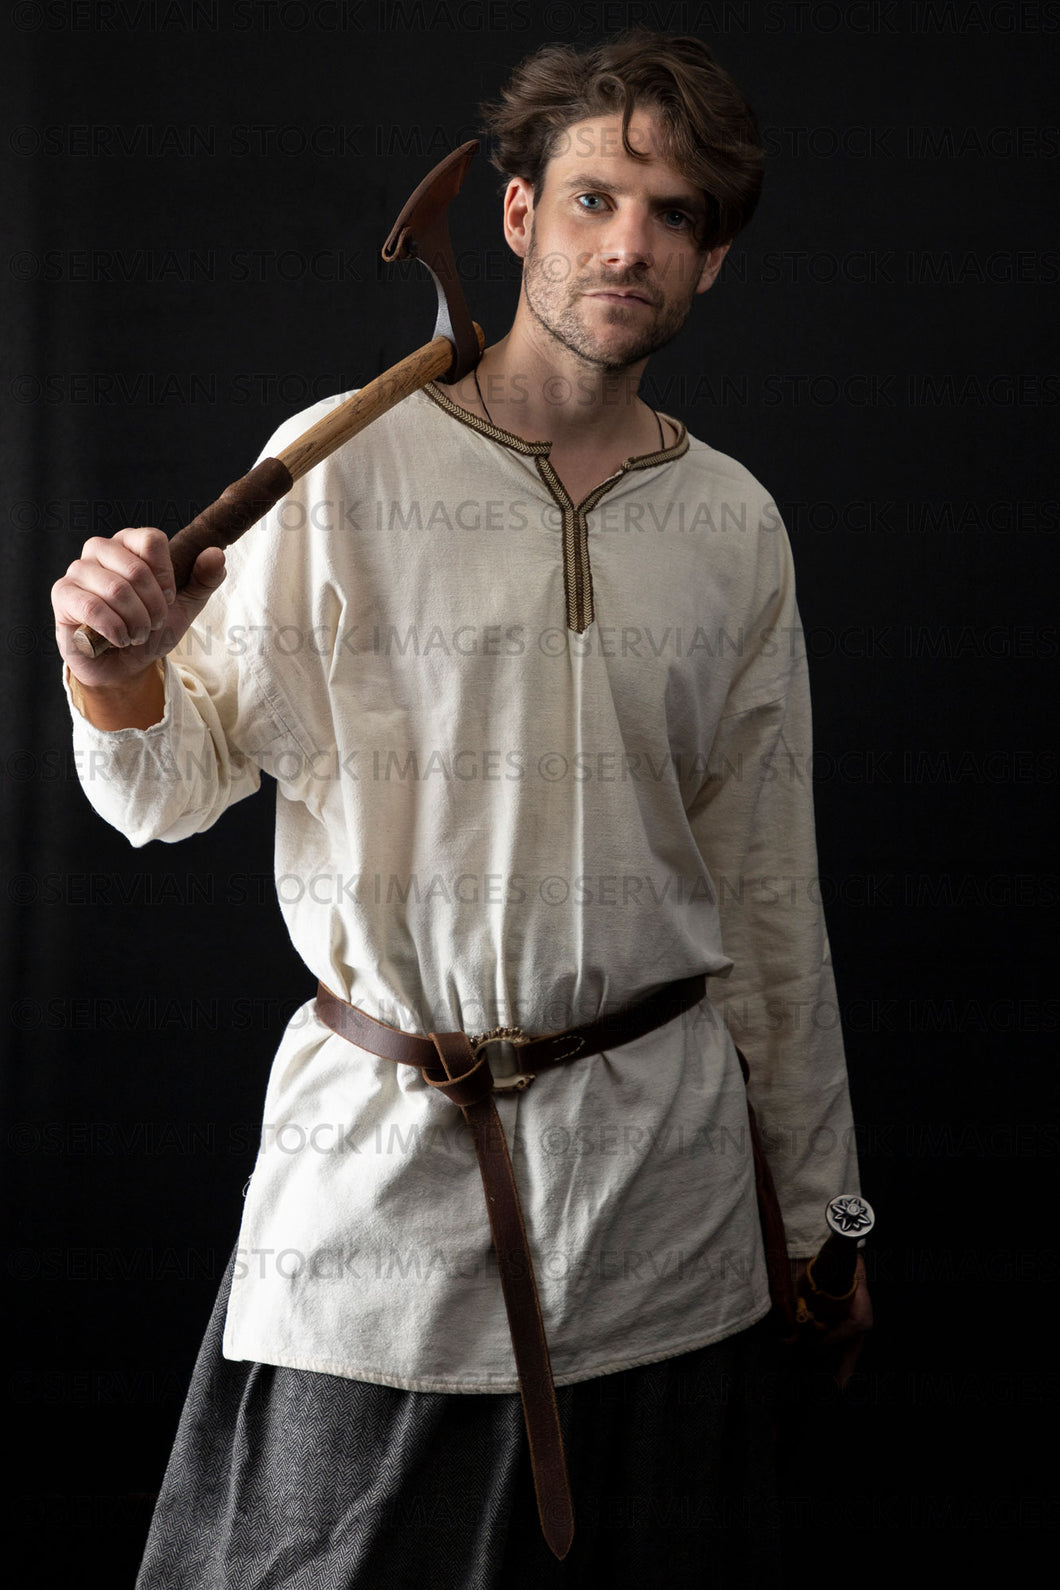 Viking or high fantasy man against a black backdrop (James 1002)